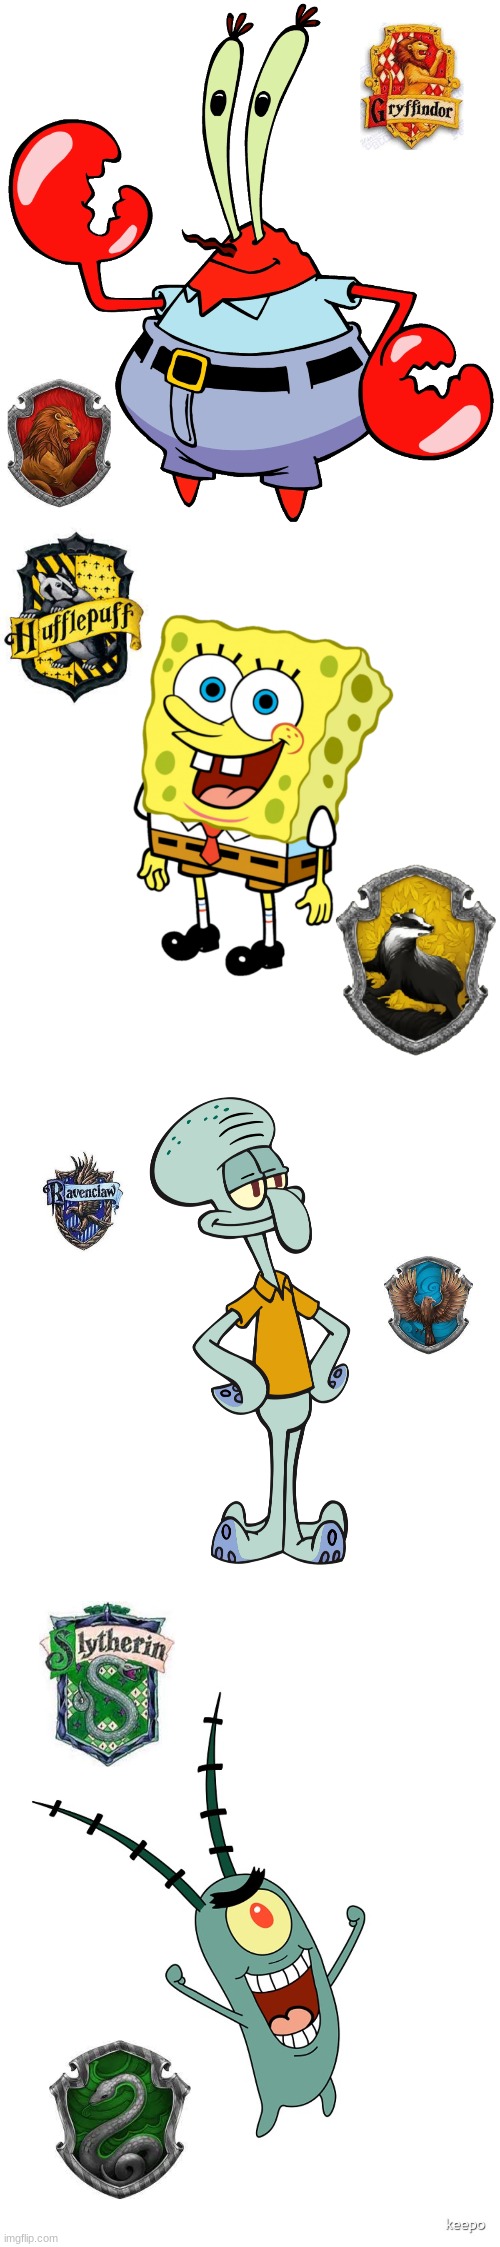 Hogwarts: SpongeBob SquarePants edition | image tagged in memes,hogwarts,spongebob squarepants,nickelodeon | made w/ Imgflip meme maker